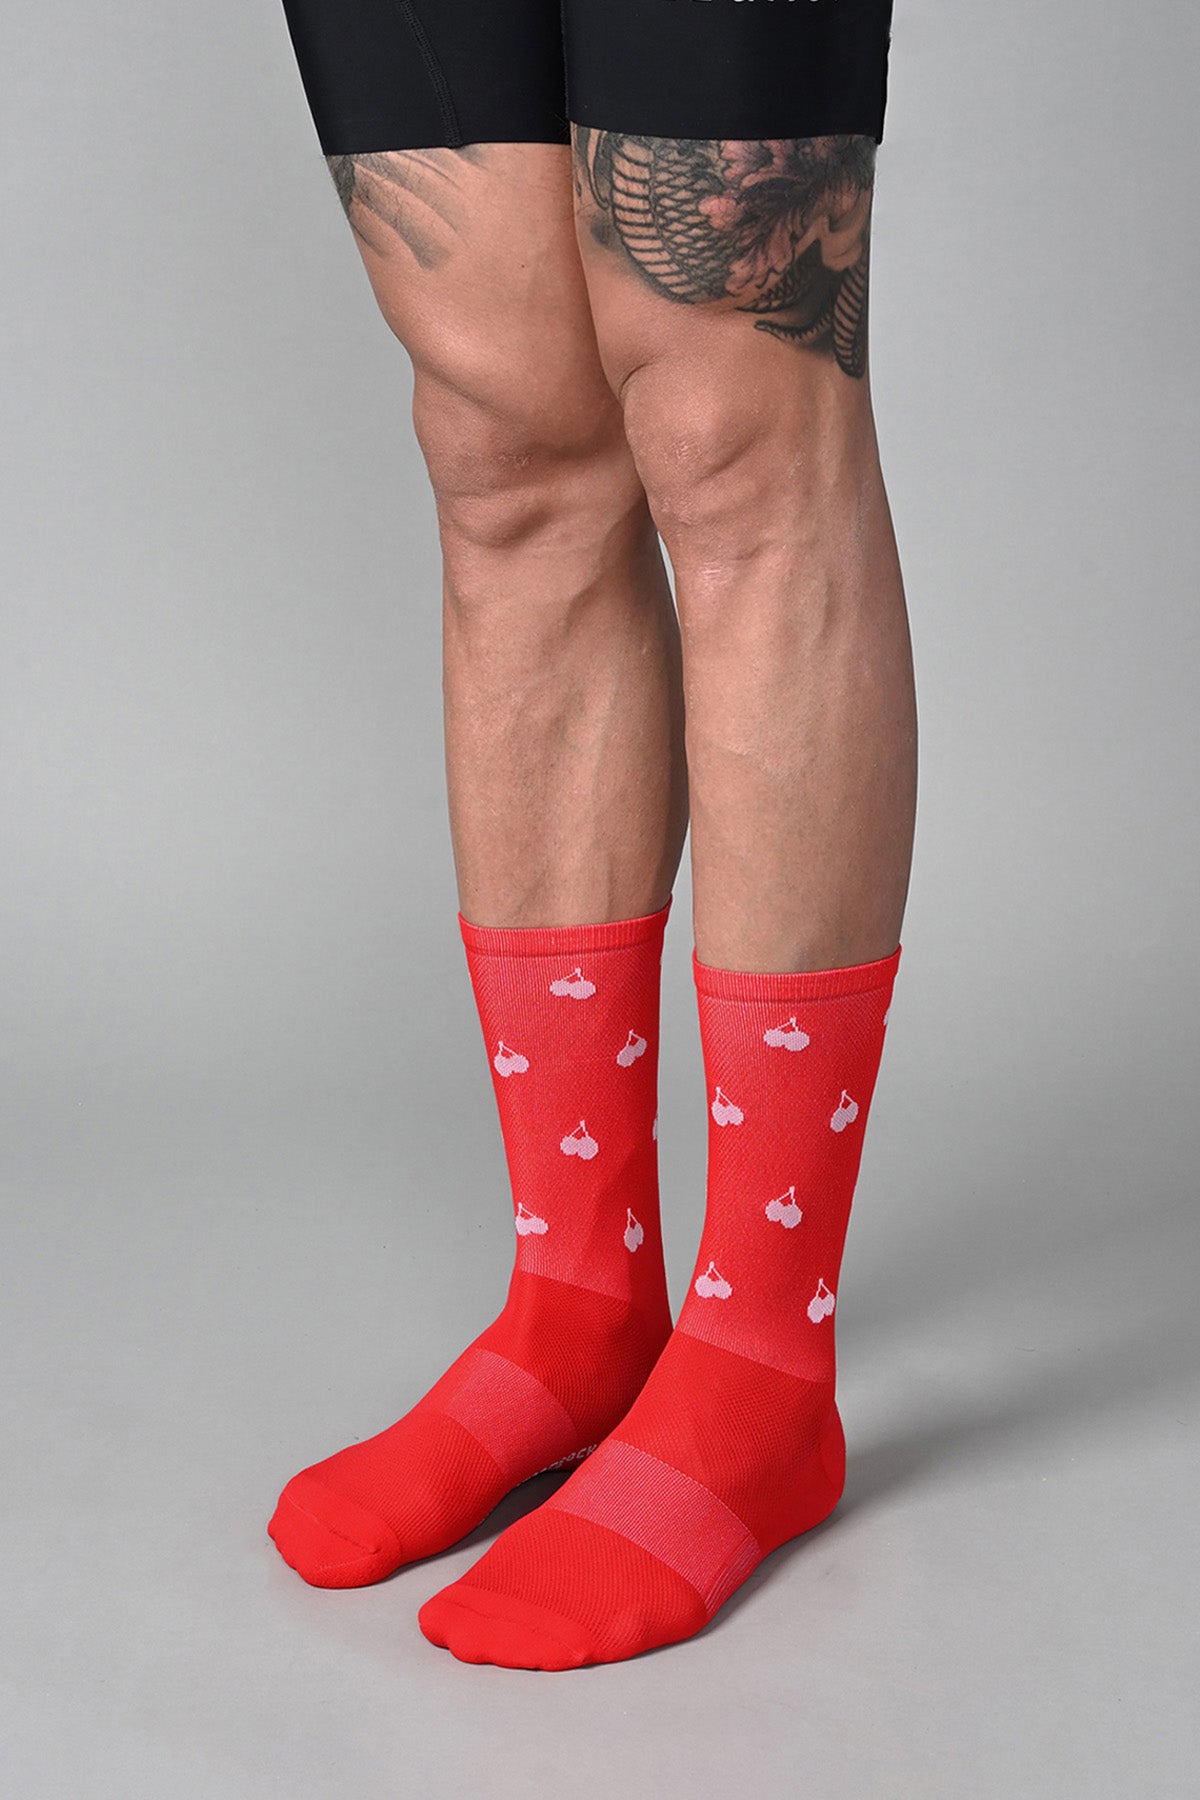 CHERRY - CANDY APPLE RED  BEST CYCLING SOCKS – YELLOW DOT SOCKS